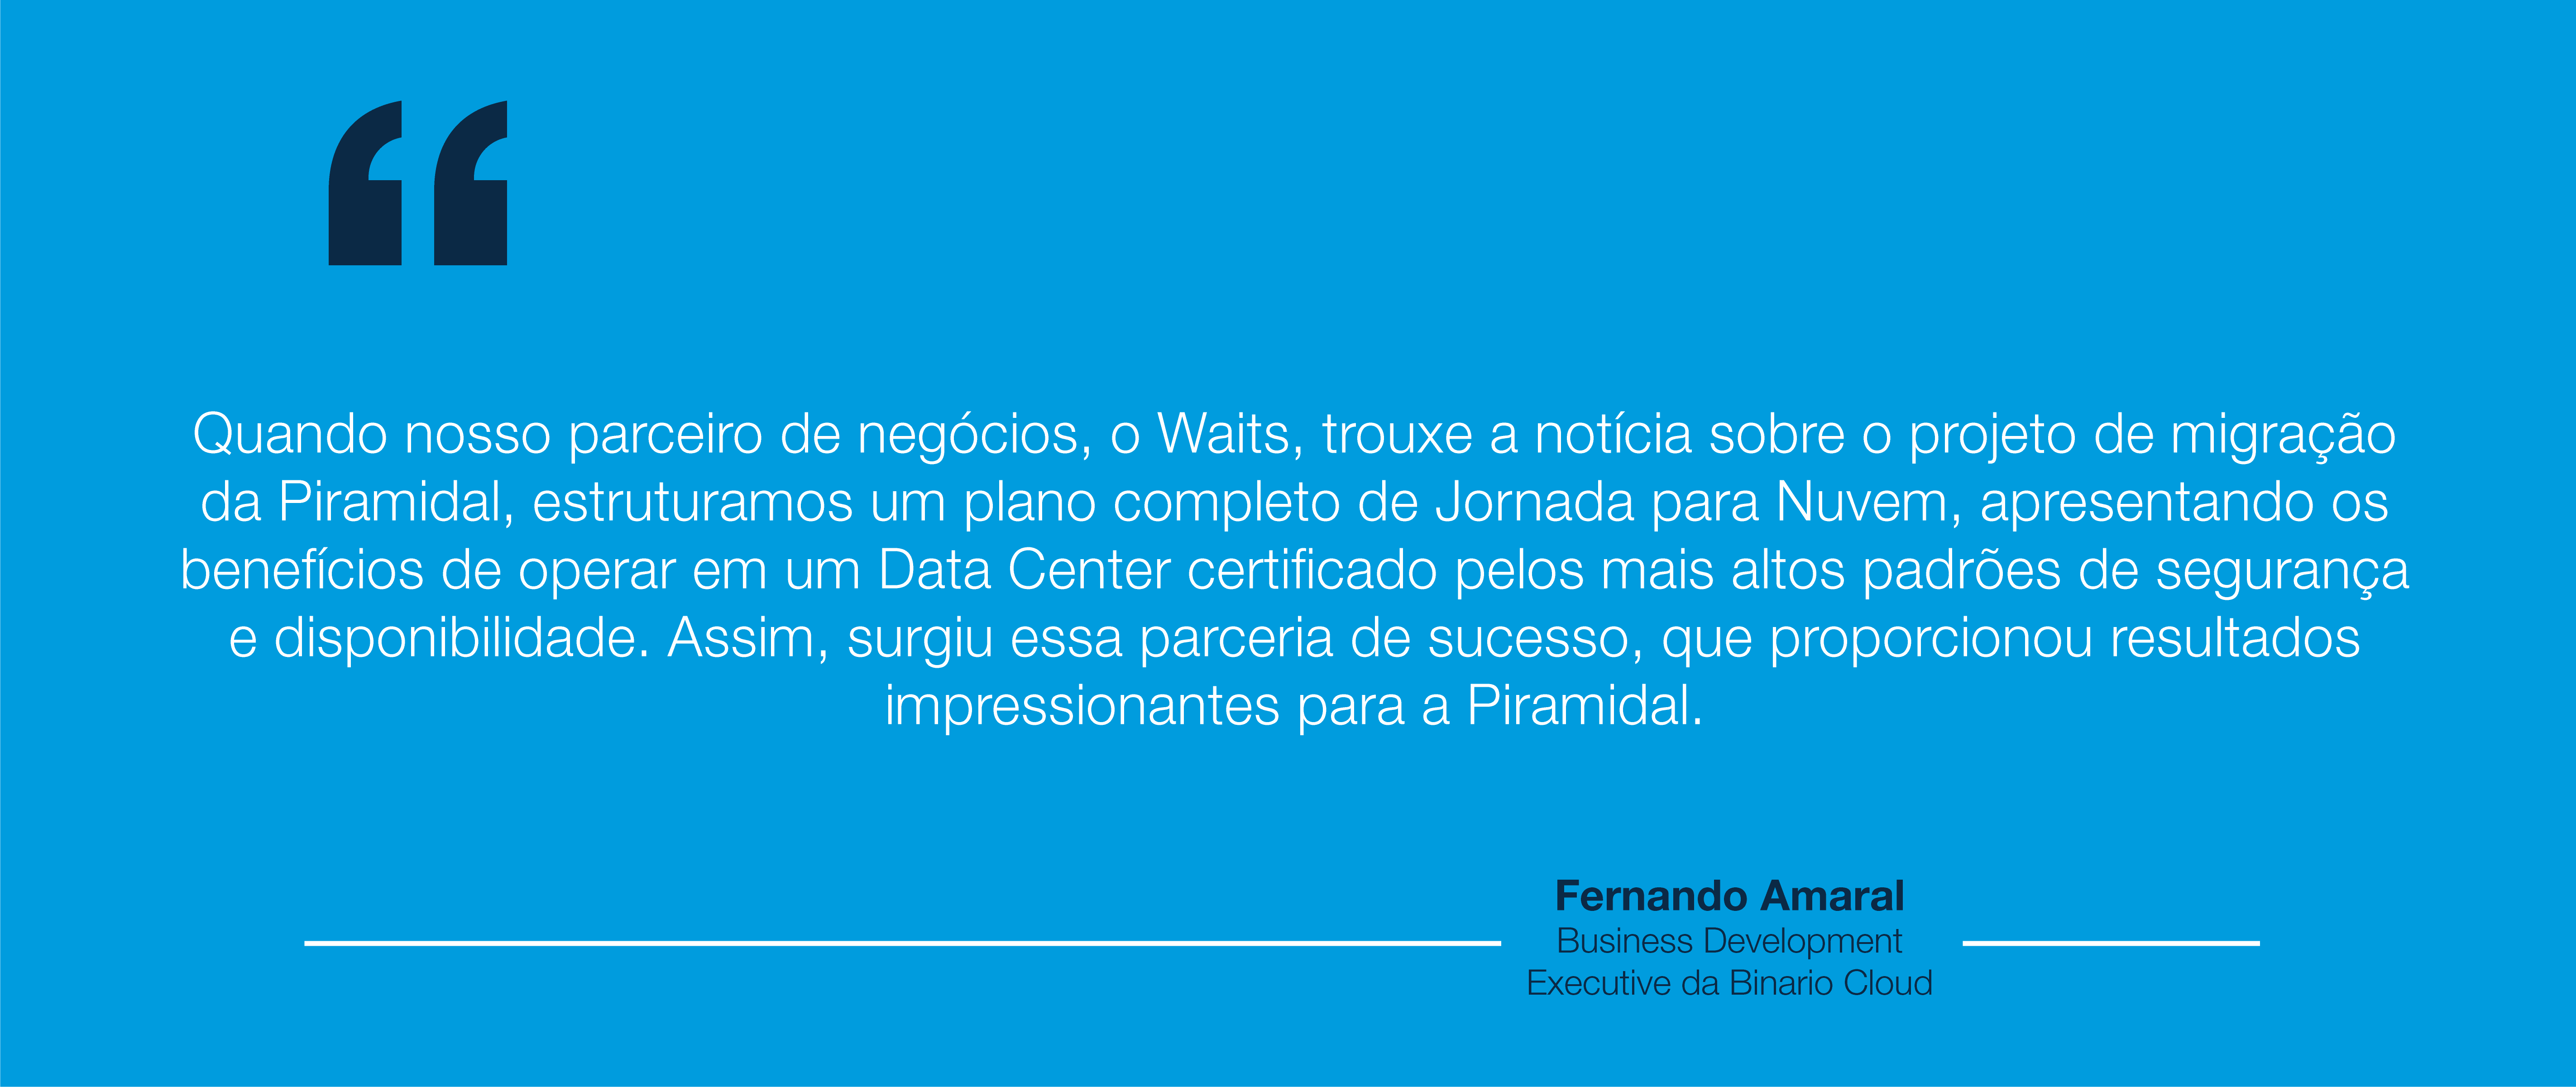 PIRAMIDAL-Fernando